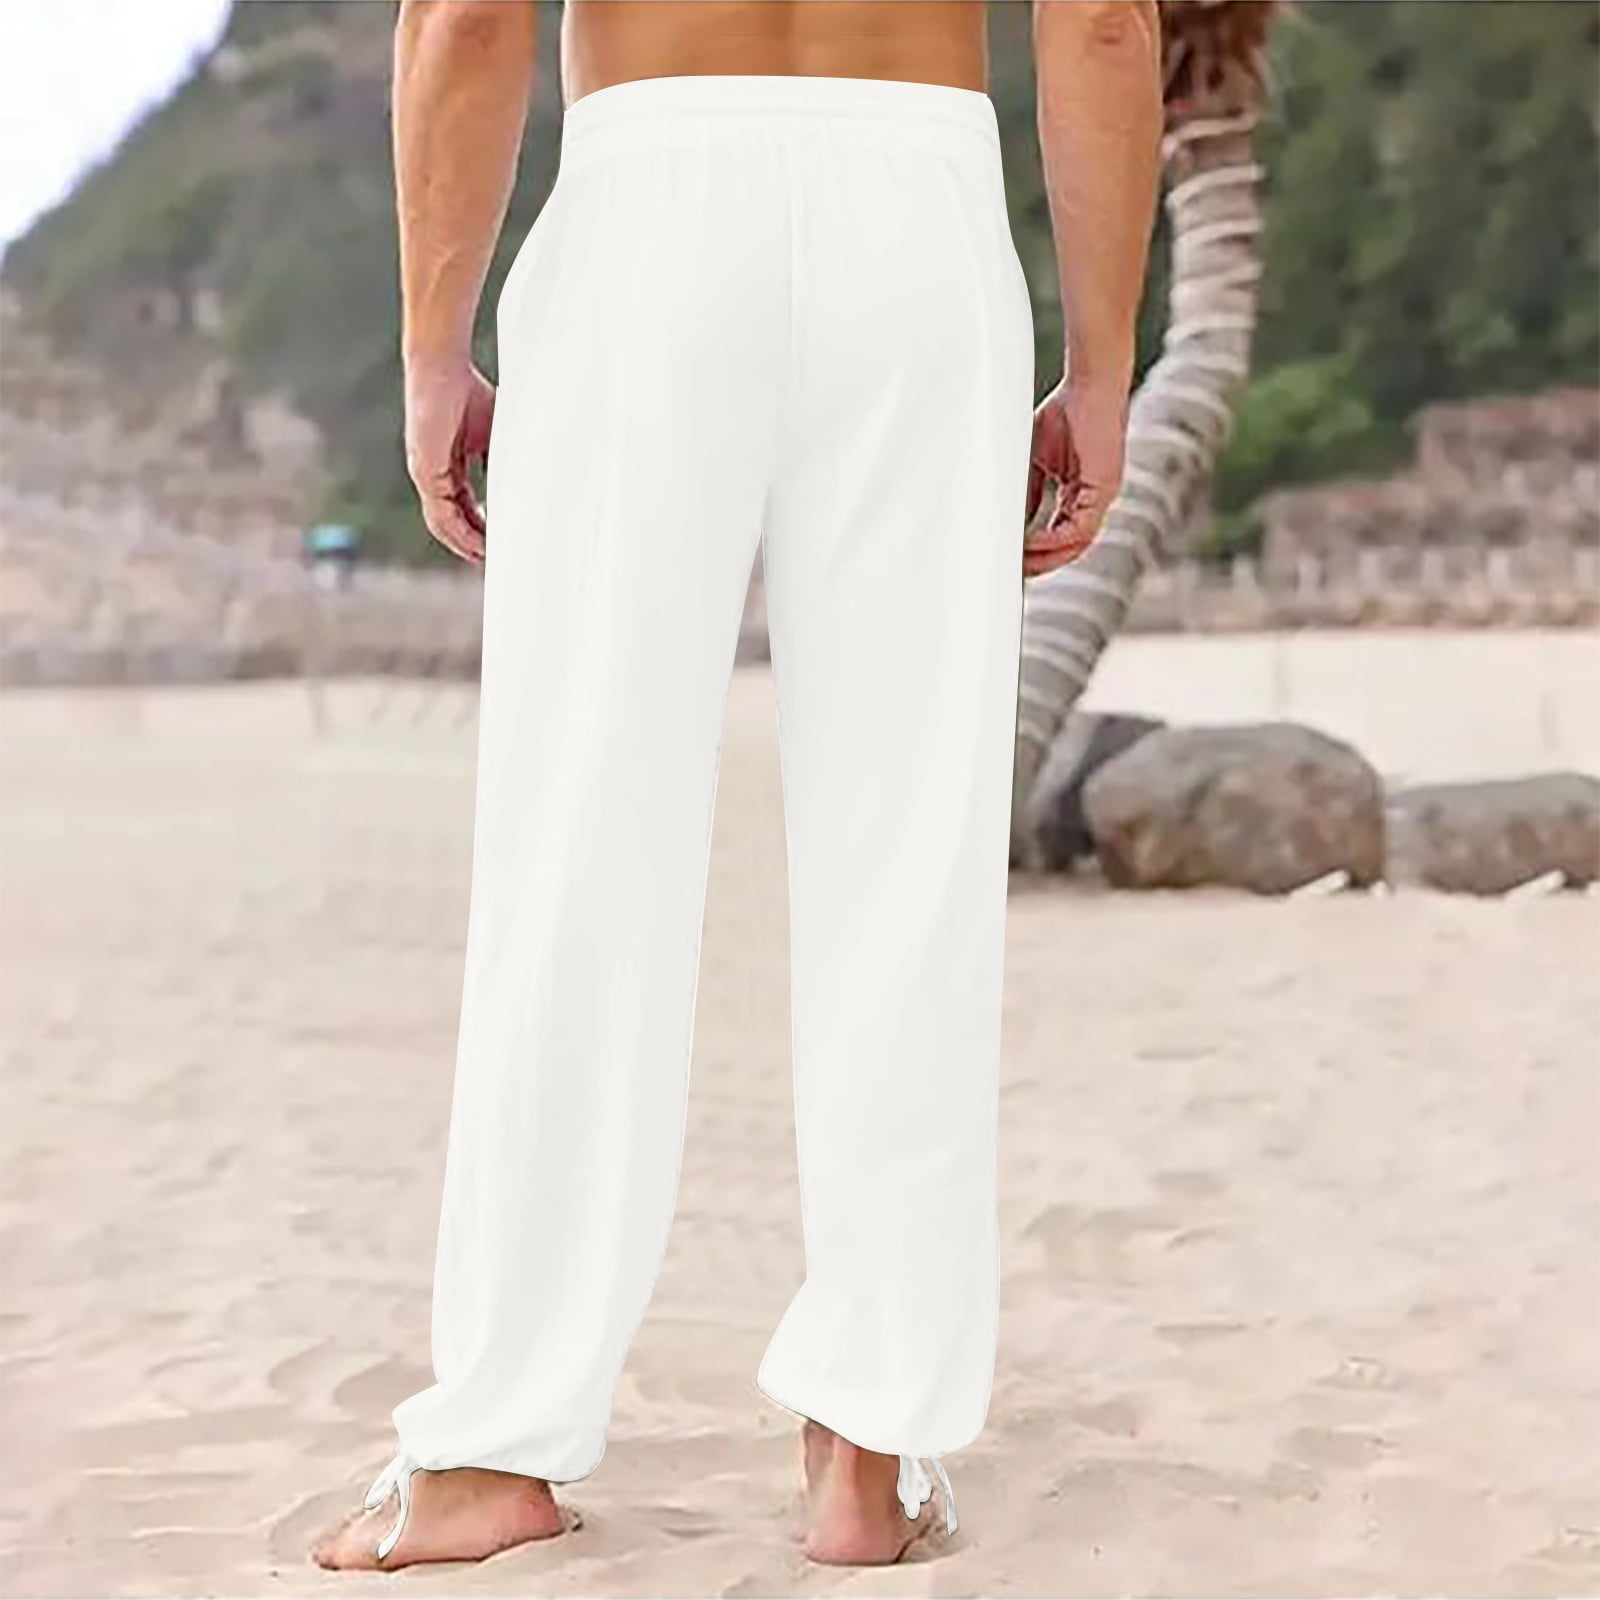 Cotton Pants Men White - Buy Cotton Pants Men White online in India